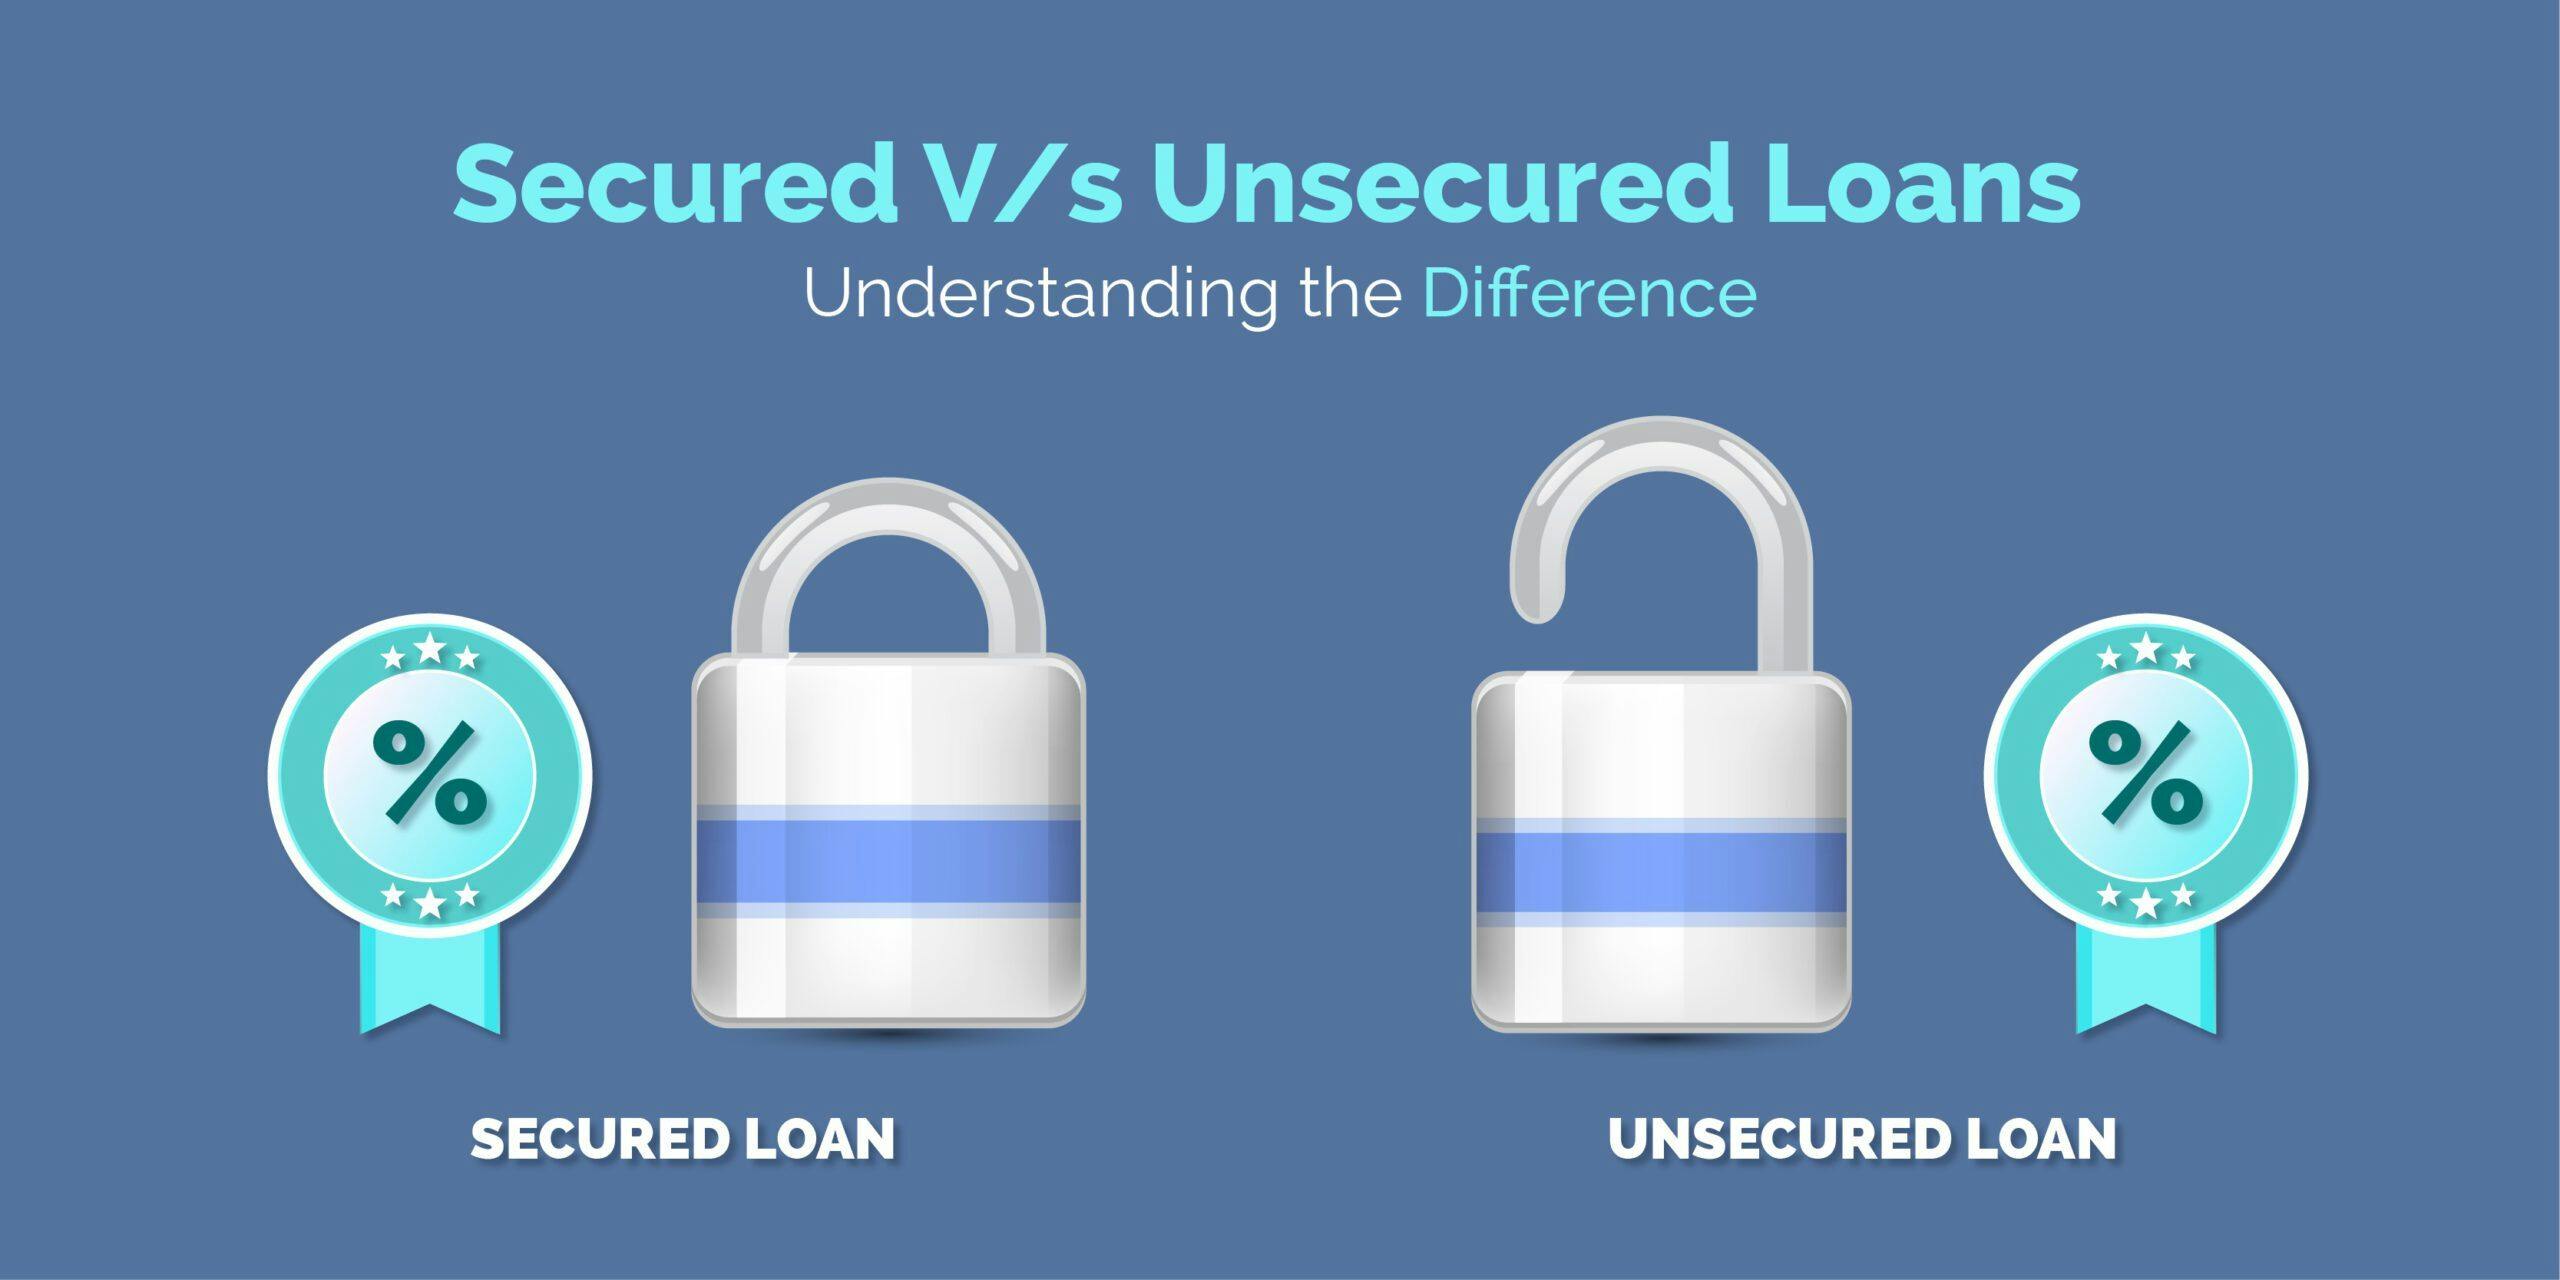 https://wsa-website-assets.s3.amazonaws.com/assets/images/Secured-vs-Unsecured-Loans.jpg